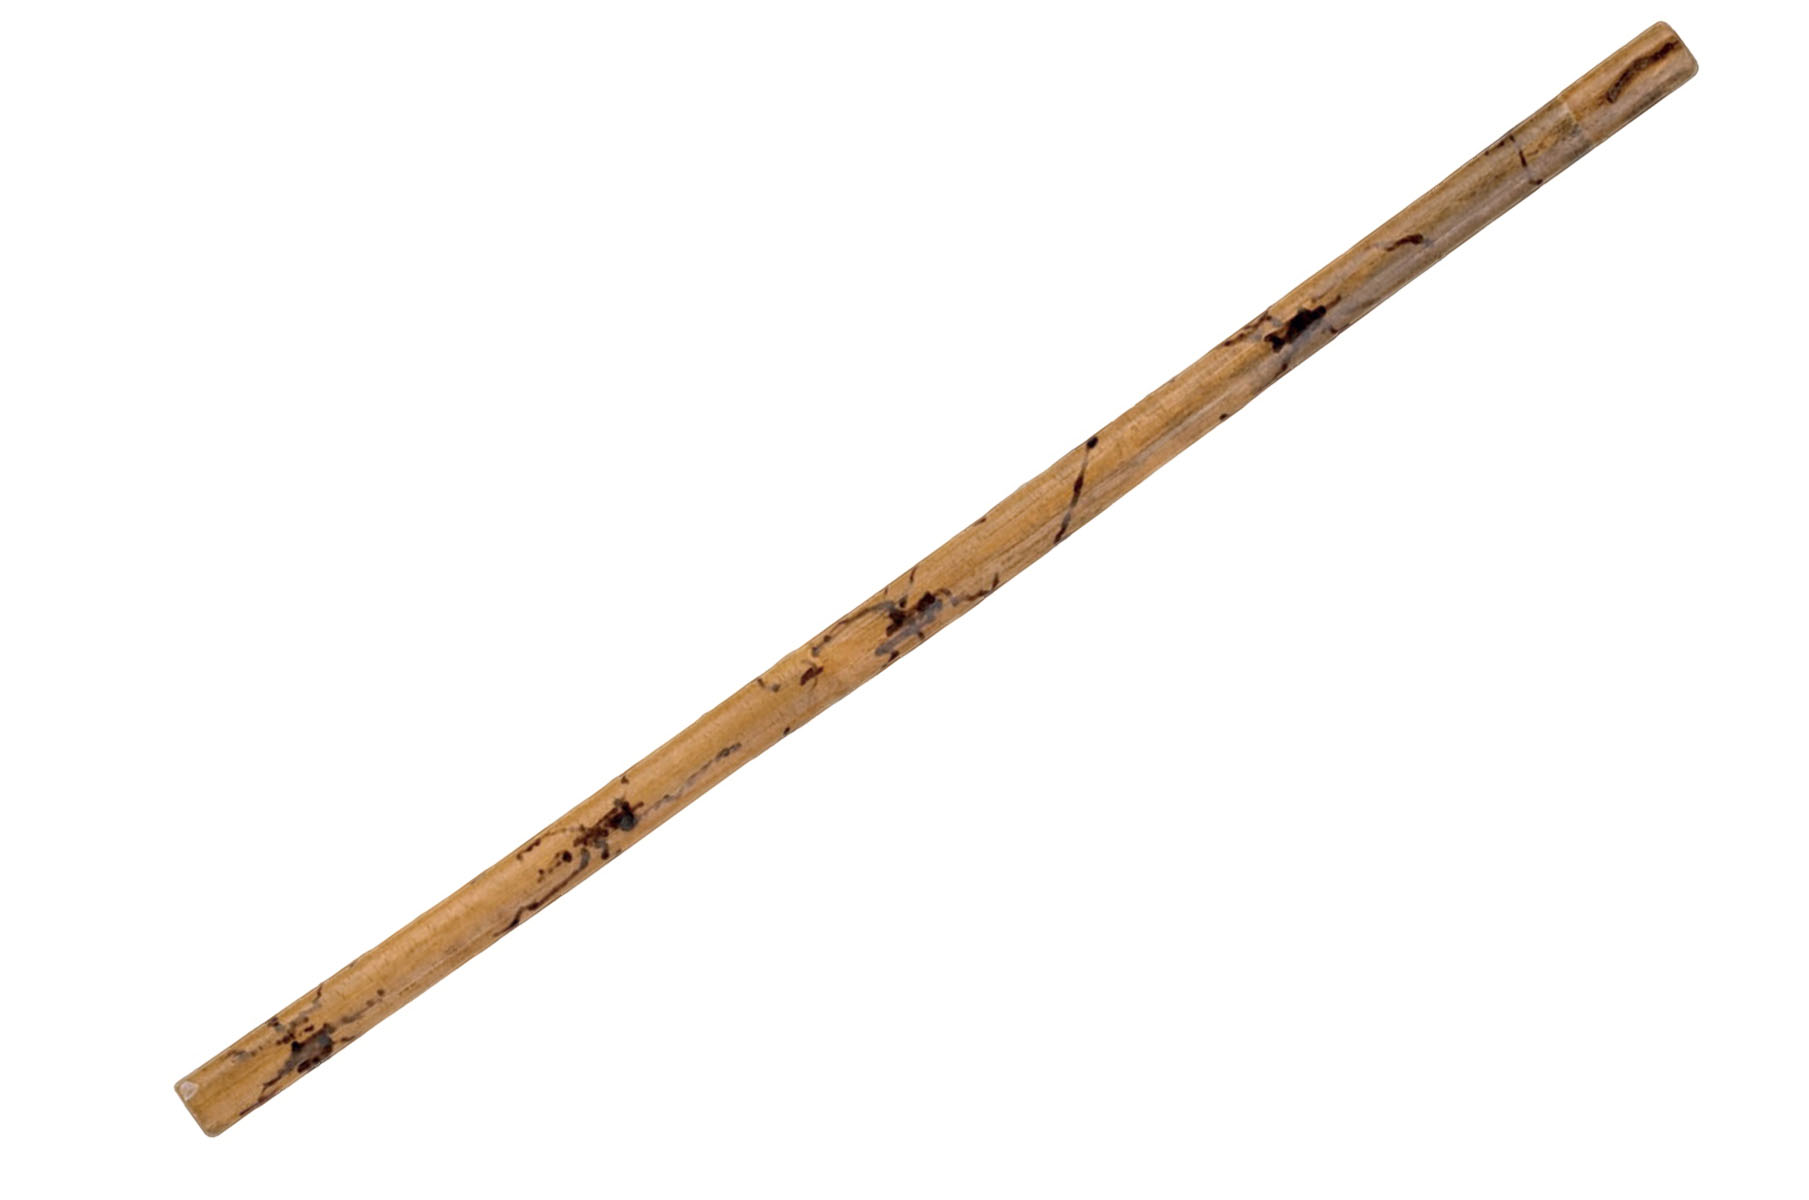 A wooden stick. Телескопический посох. Для Stick. Wood Stick. Long Stick.